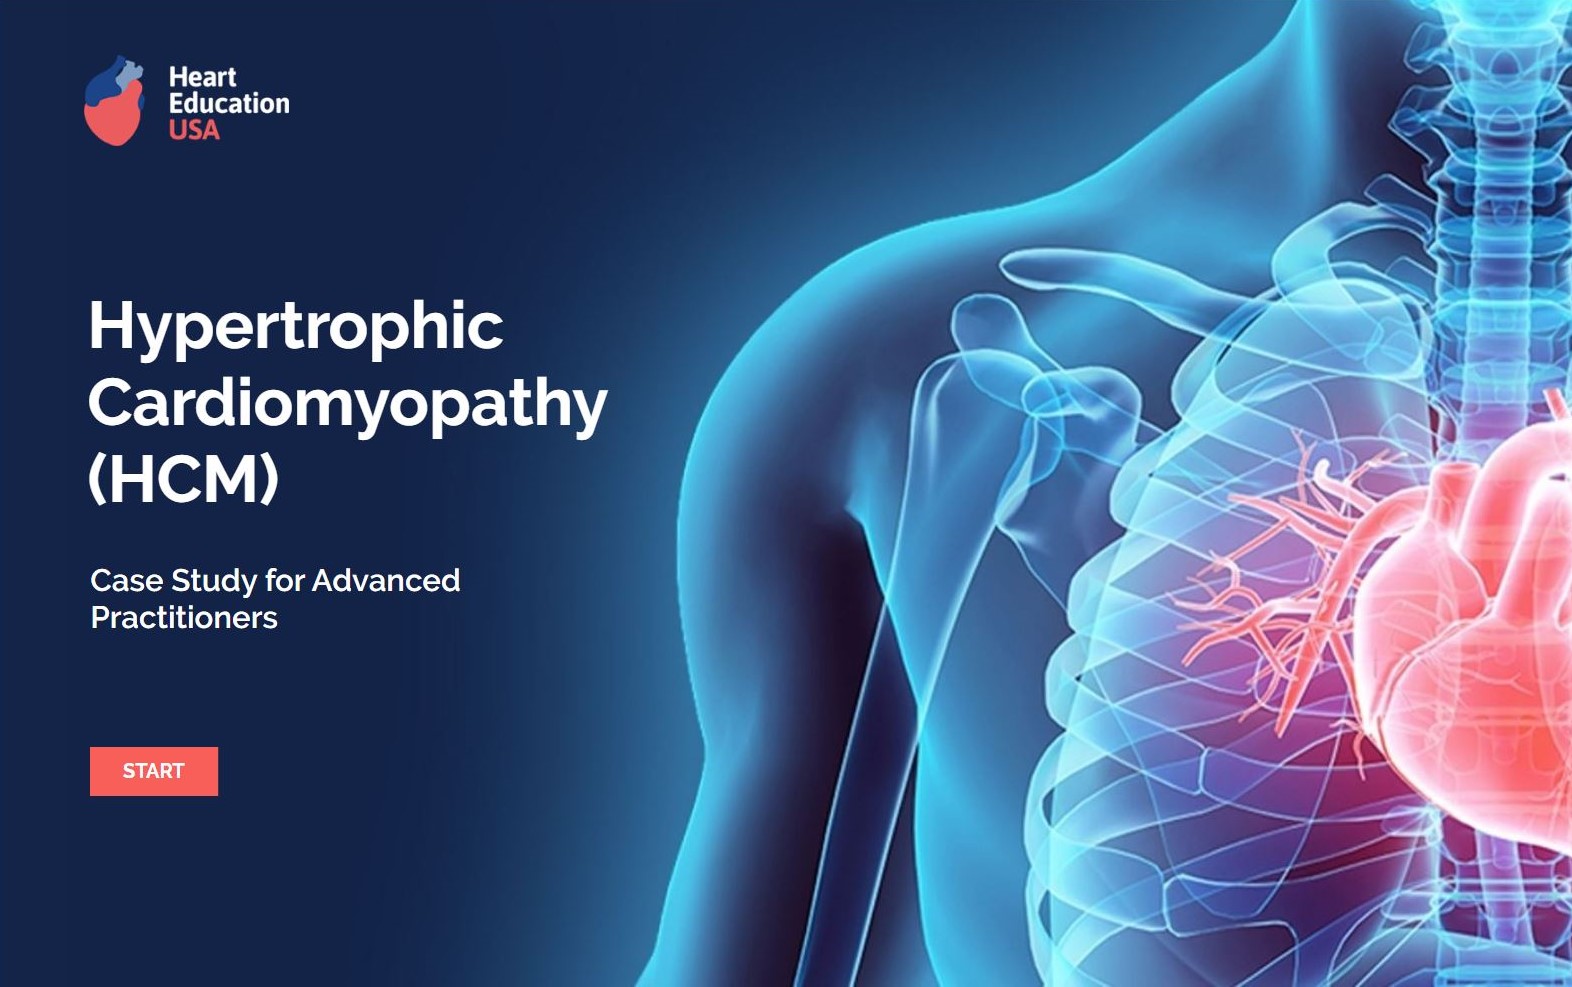 a case study of hypertrophic cardiomyopathy